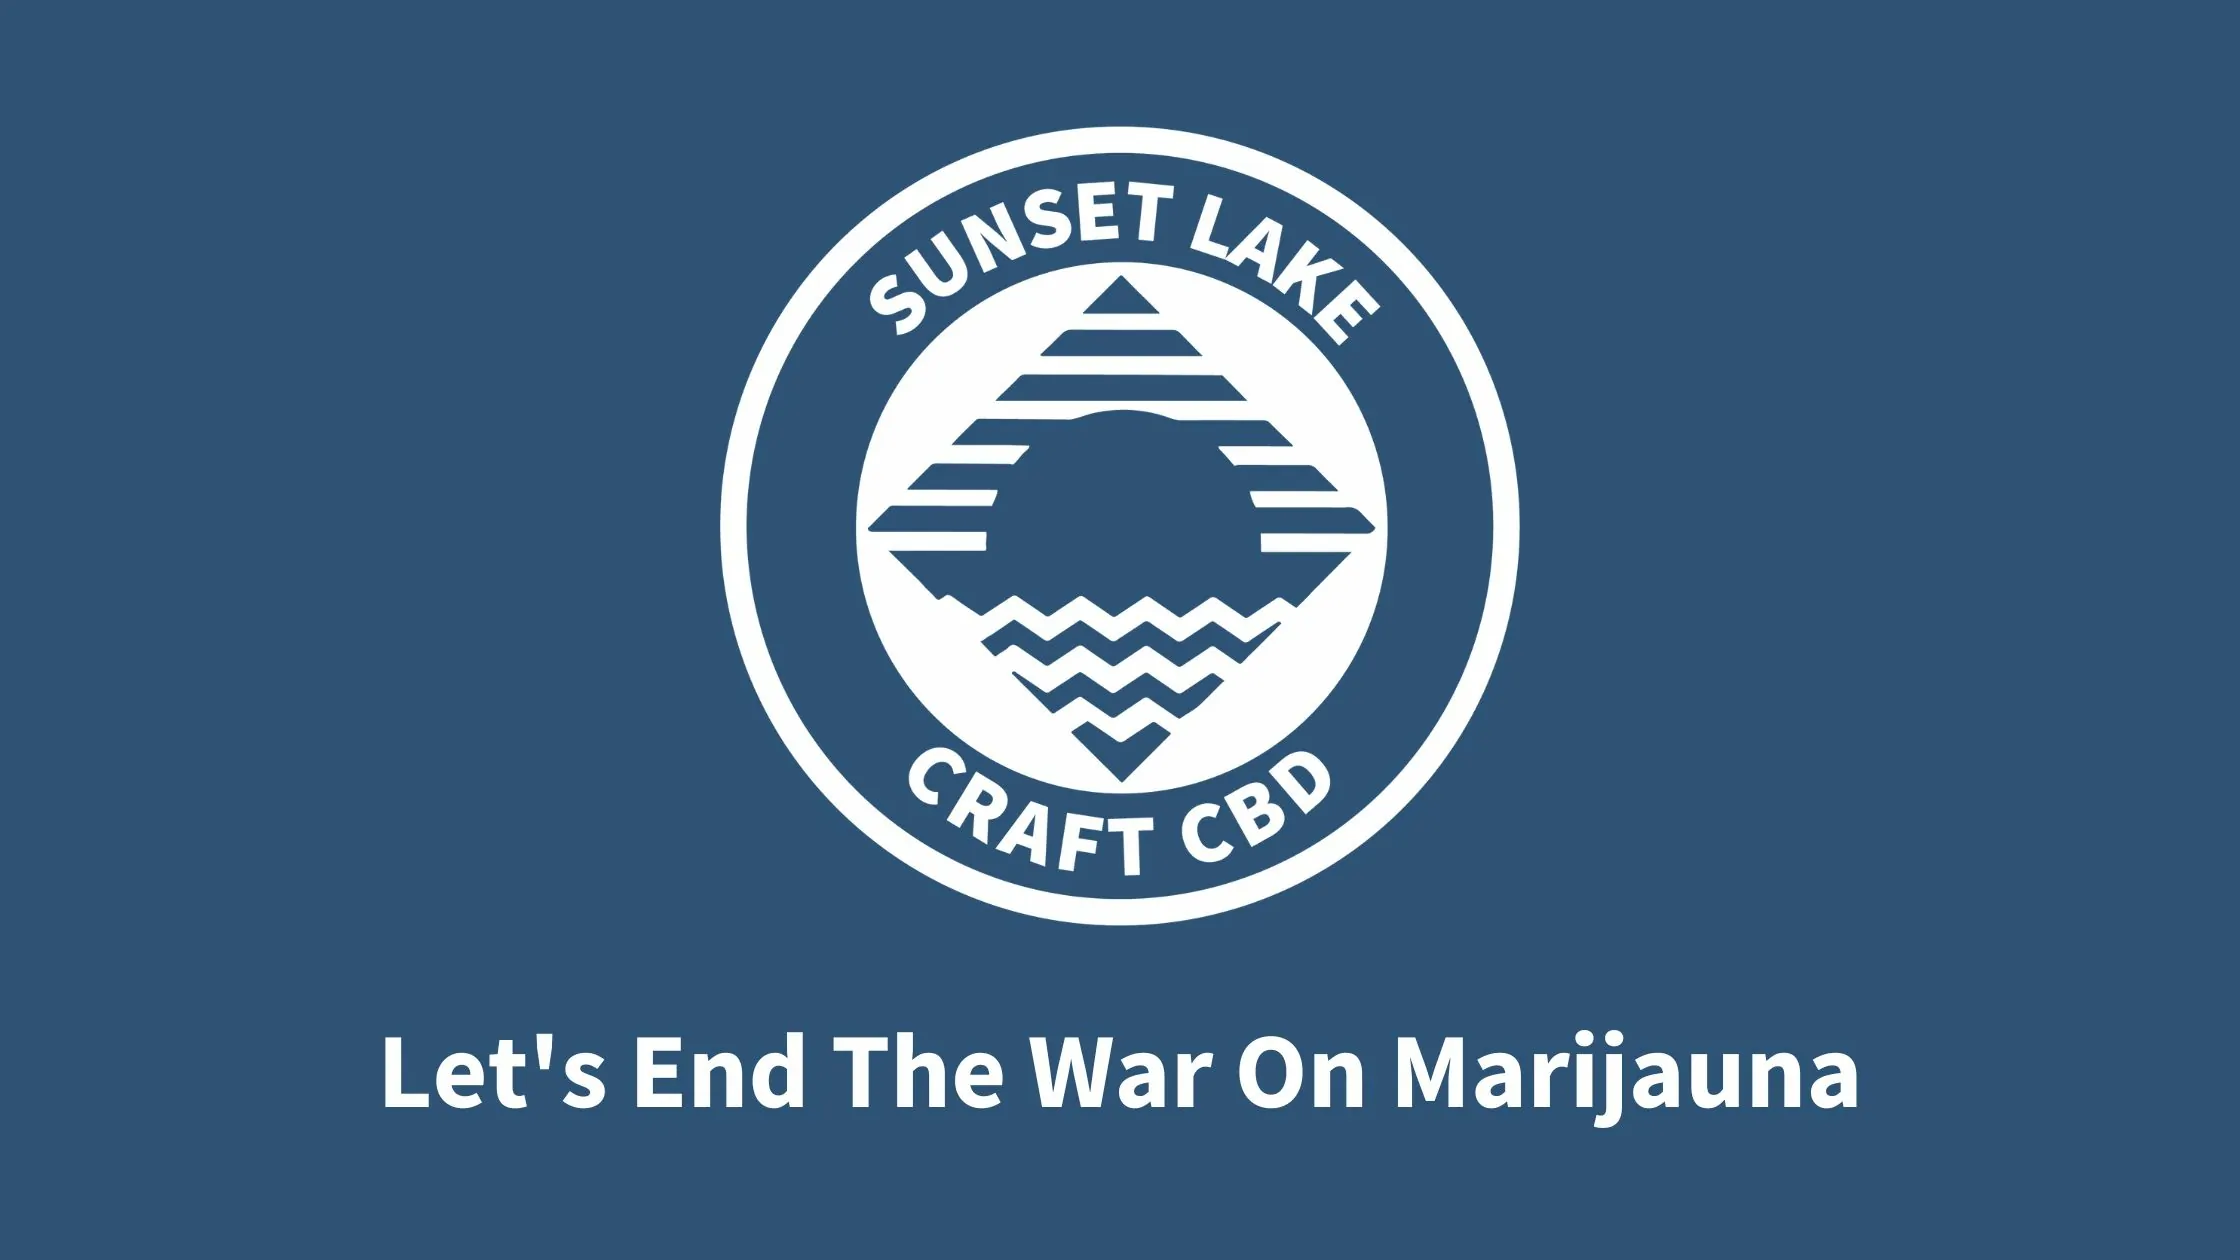 Let’s End The War On Marijuana.